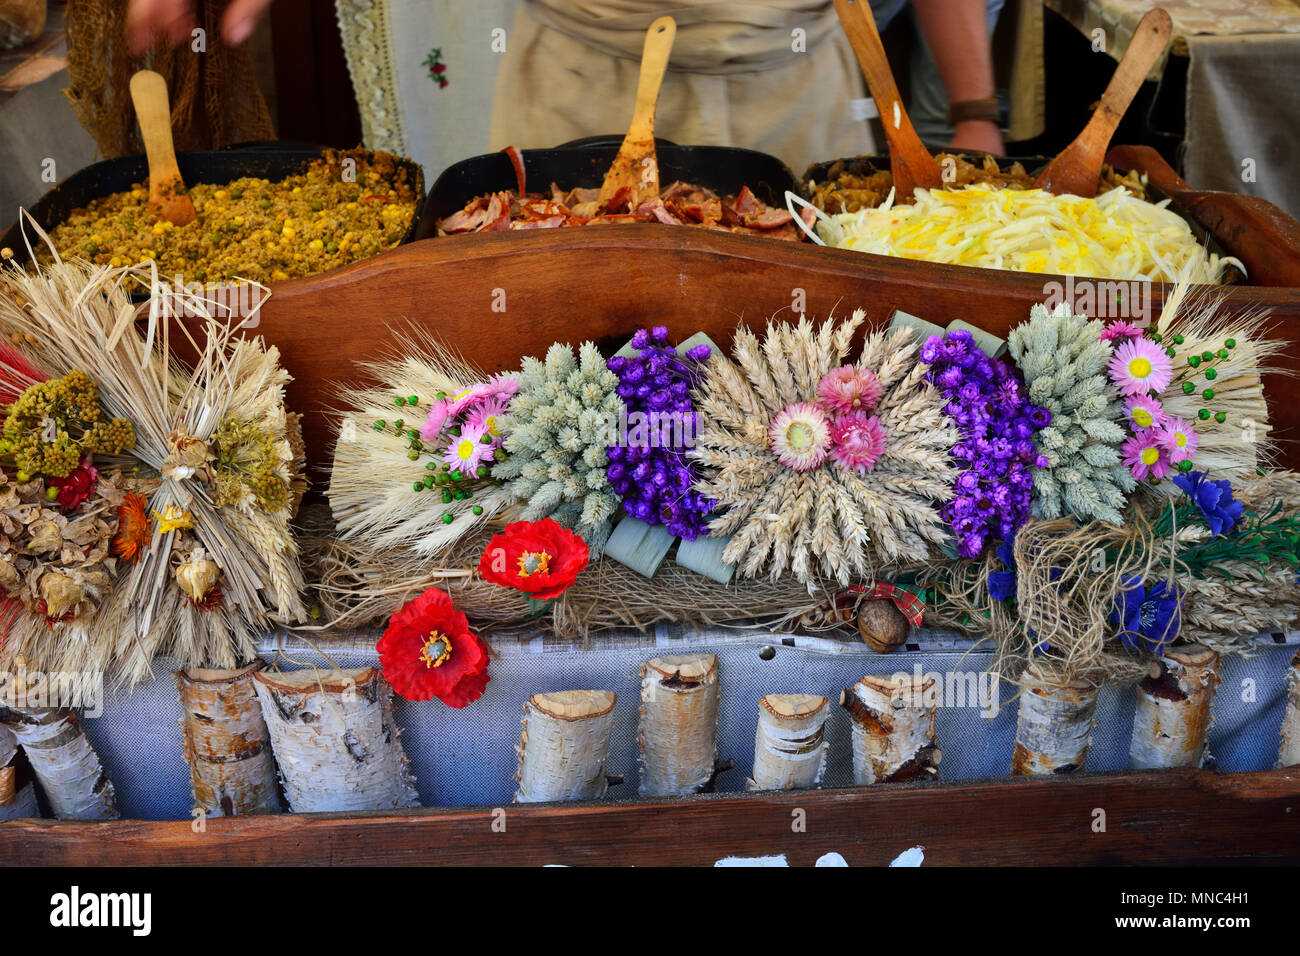 Food stall with flowers. Krakow, Poland Stock Photo